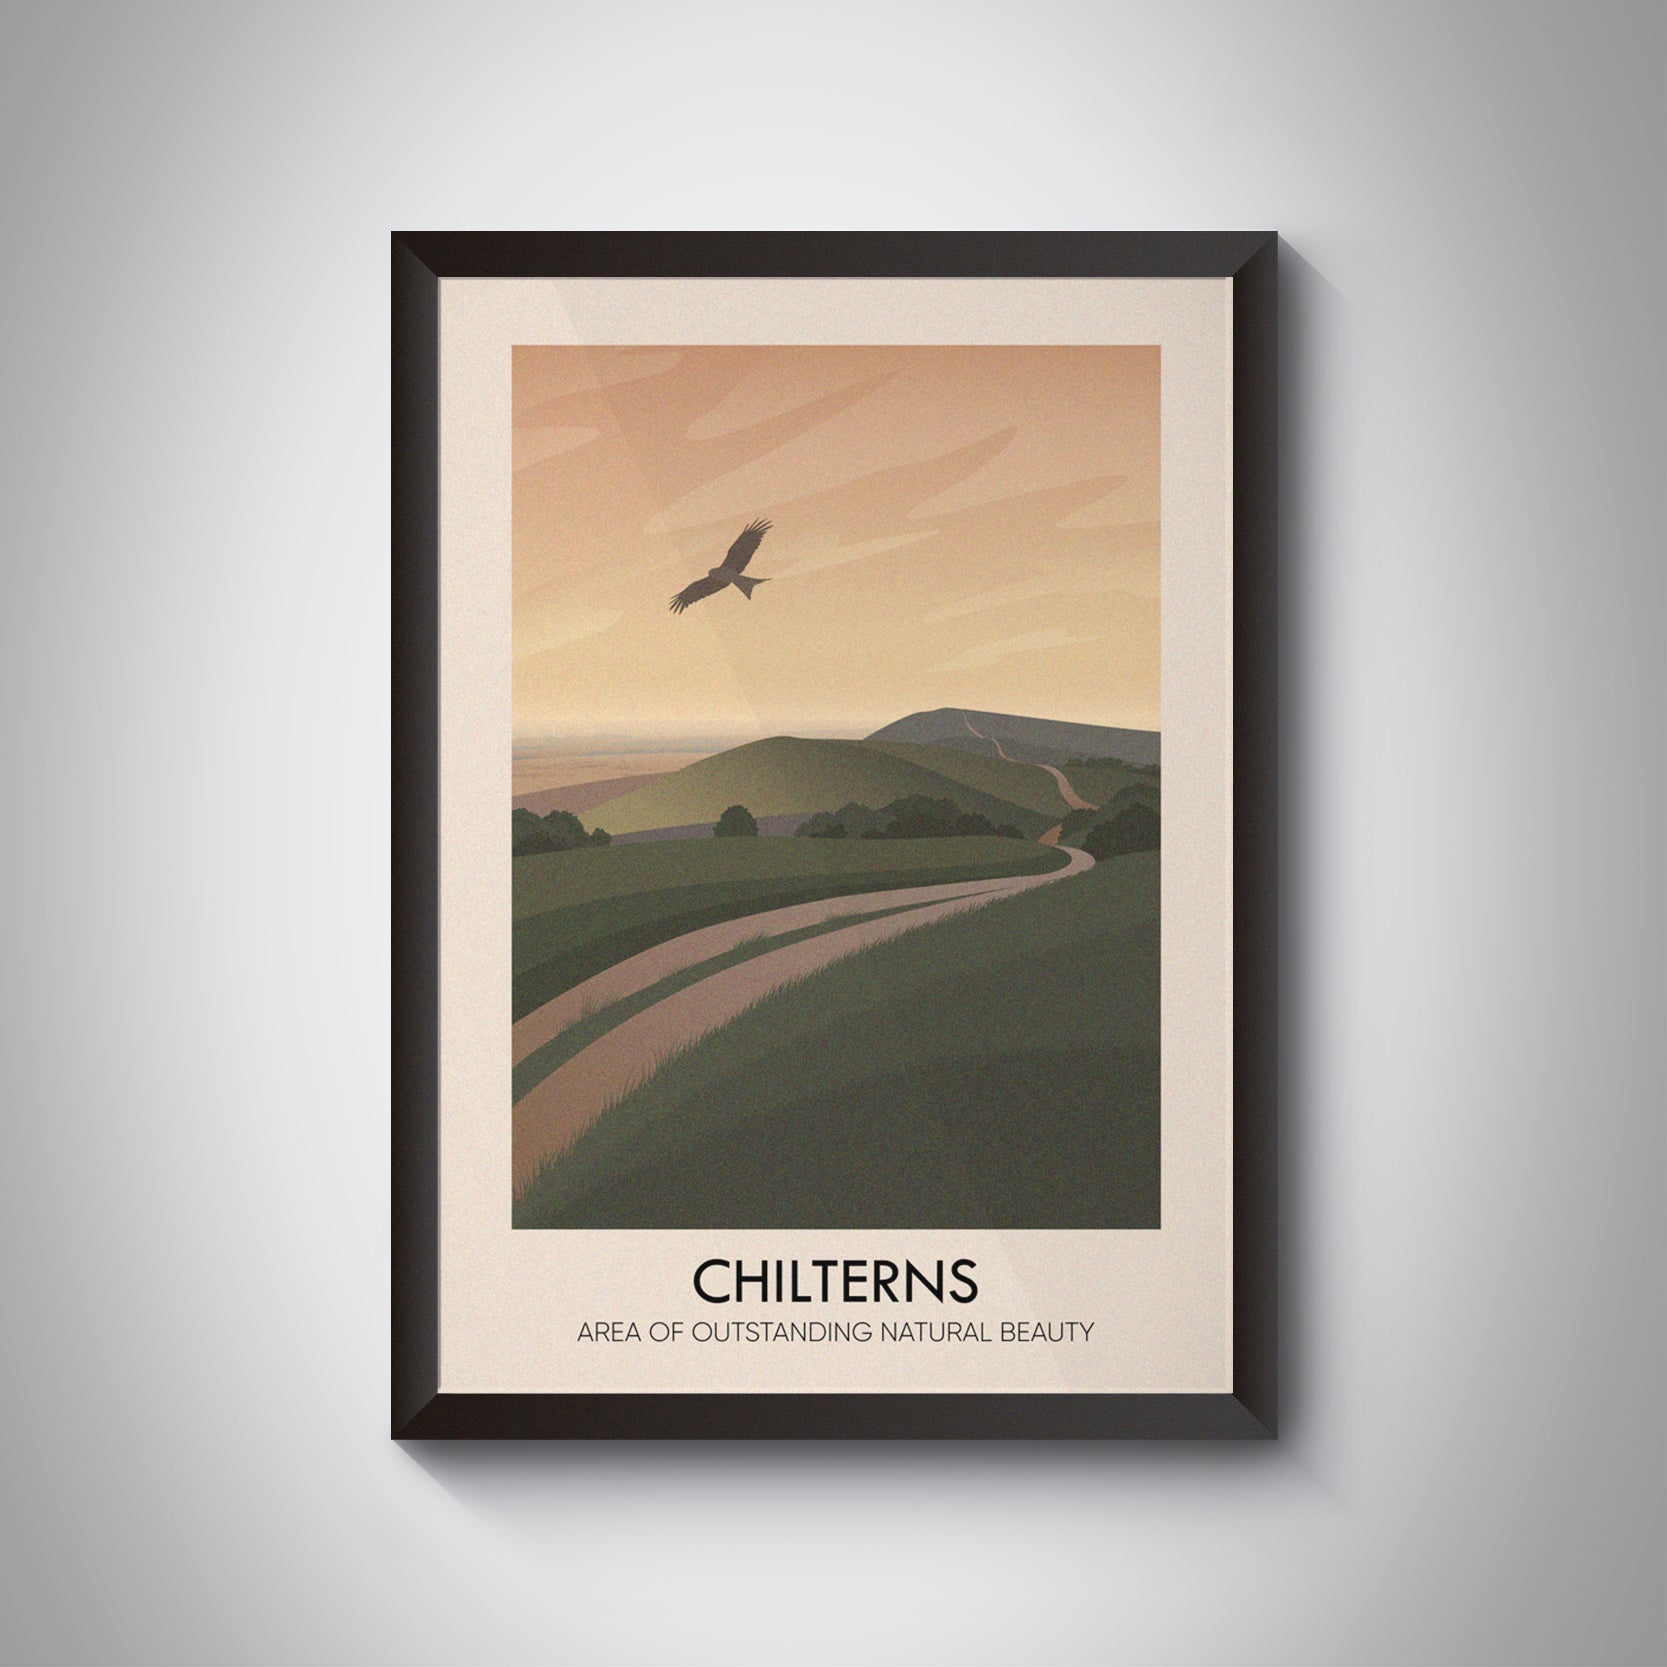 Chilterns AONB Travel Poster